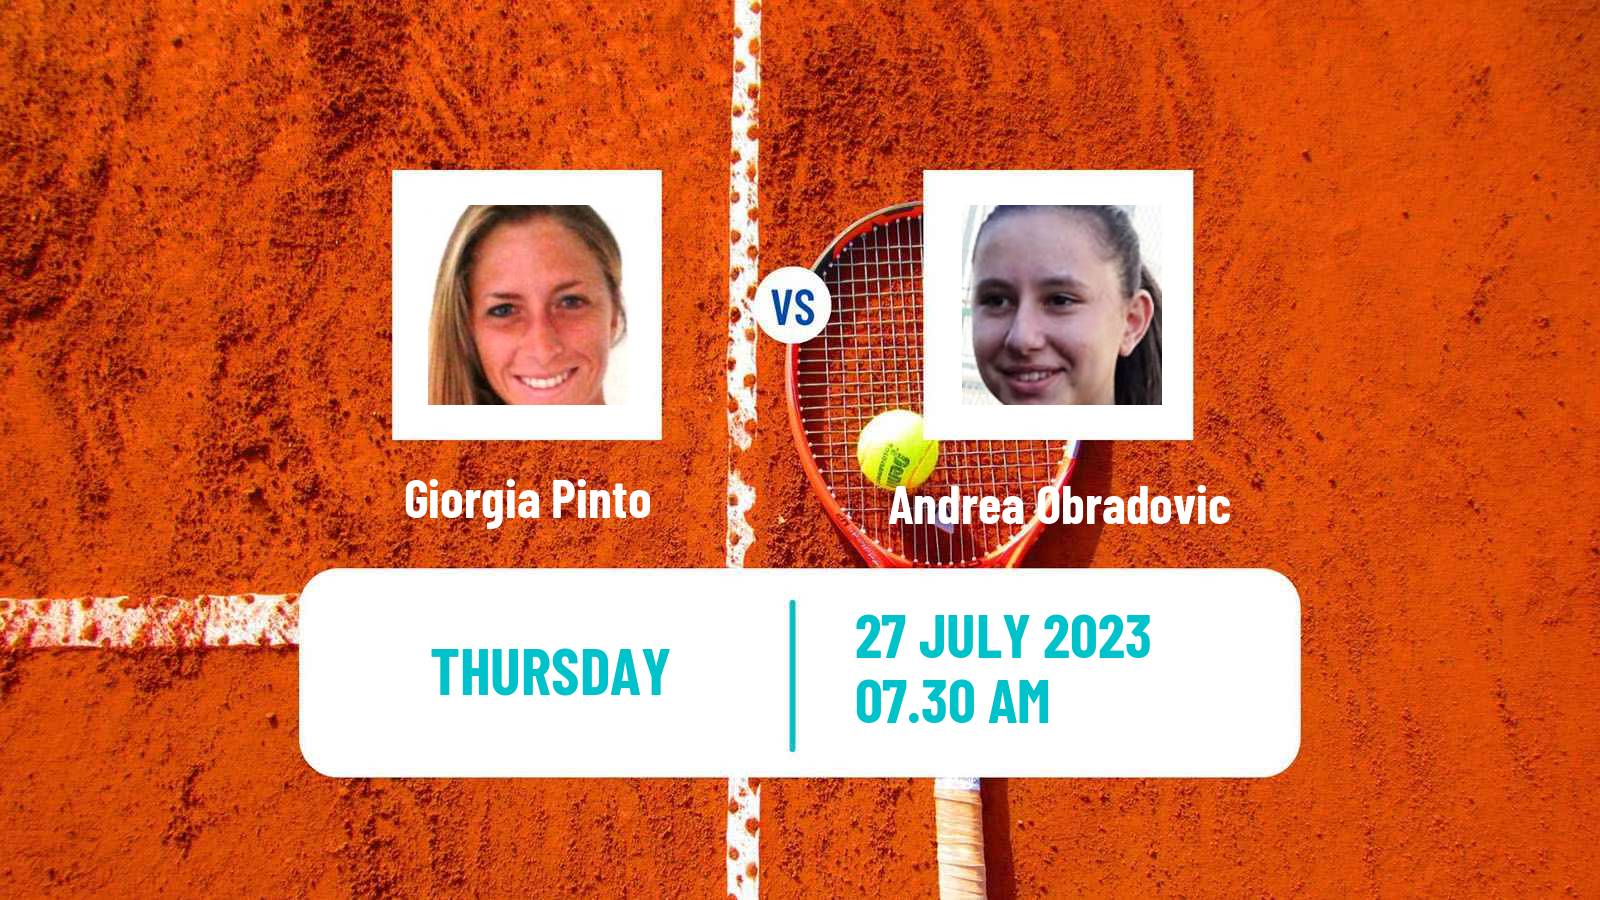 Tennis ITF W15 Casablanca 2 Women Giorgia Pinto - Andrea Obradovic